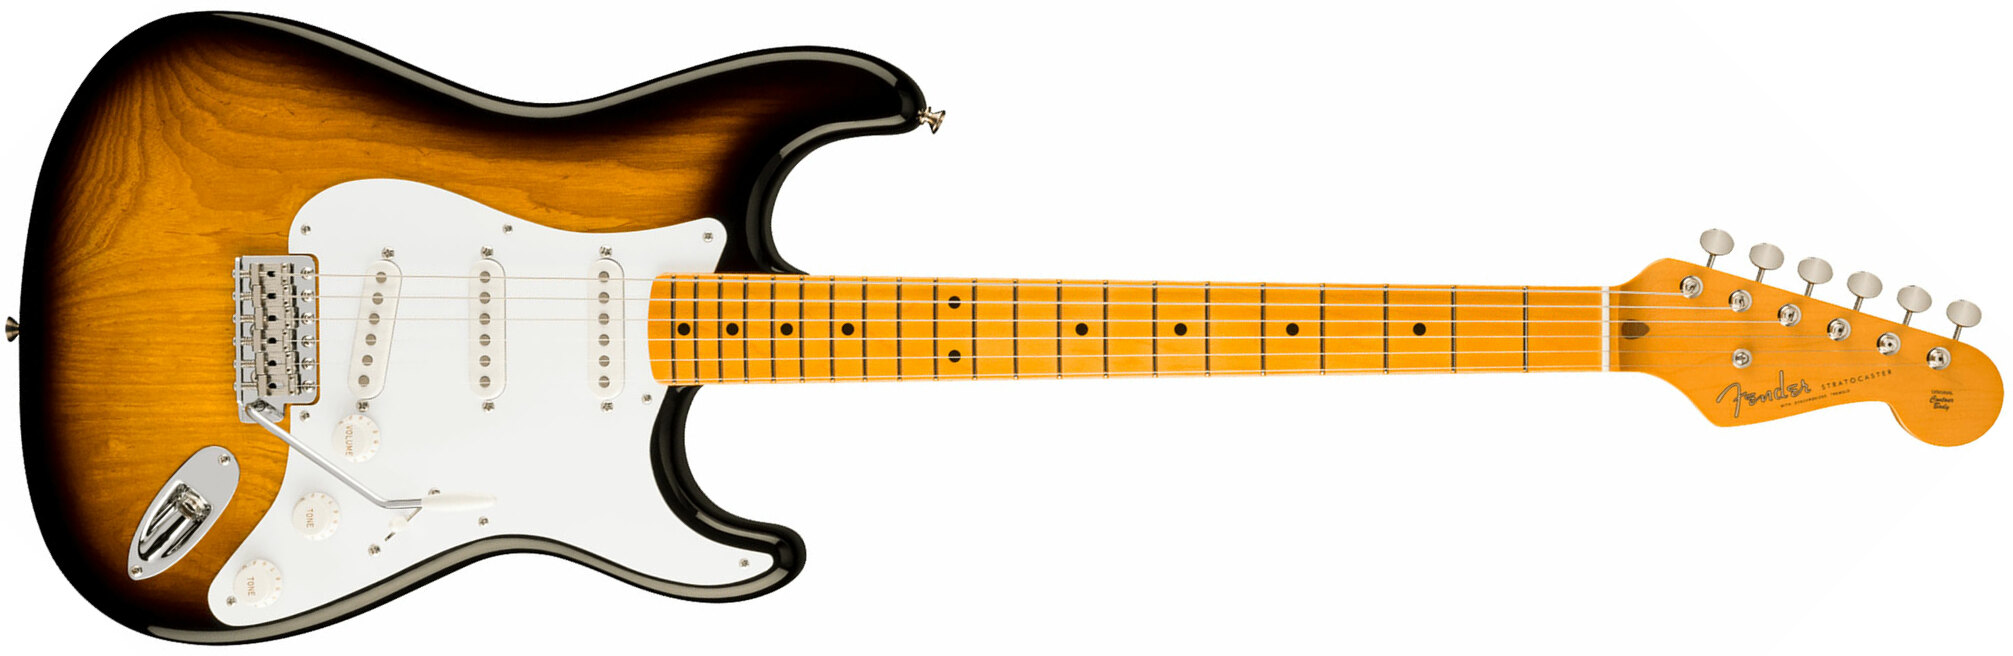 Fender Strat 1954 70th Anniversary American Vintage Ii Ltd Usa 3s Trem Mn - 2-color Sunburst - E-Gitarre in Str-Form - Main picture